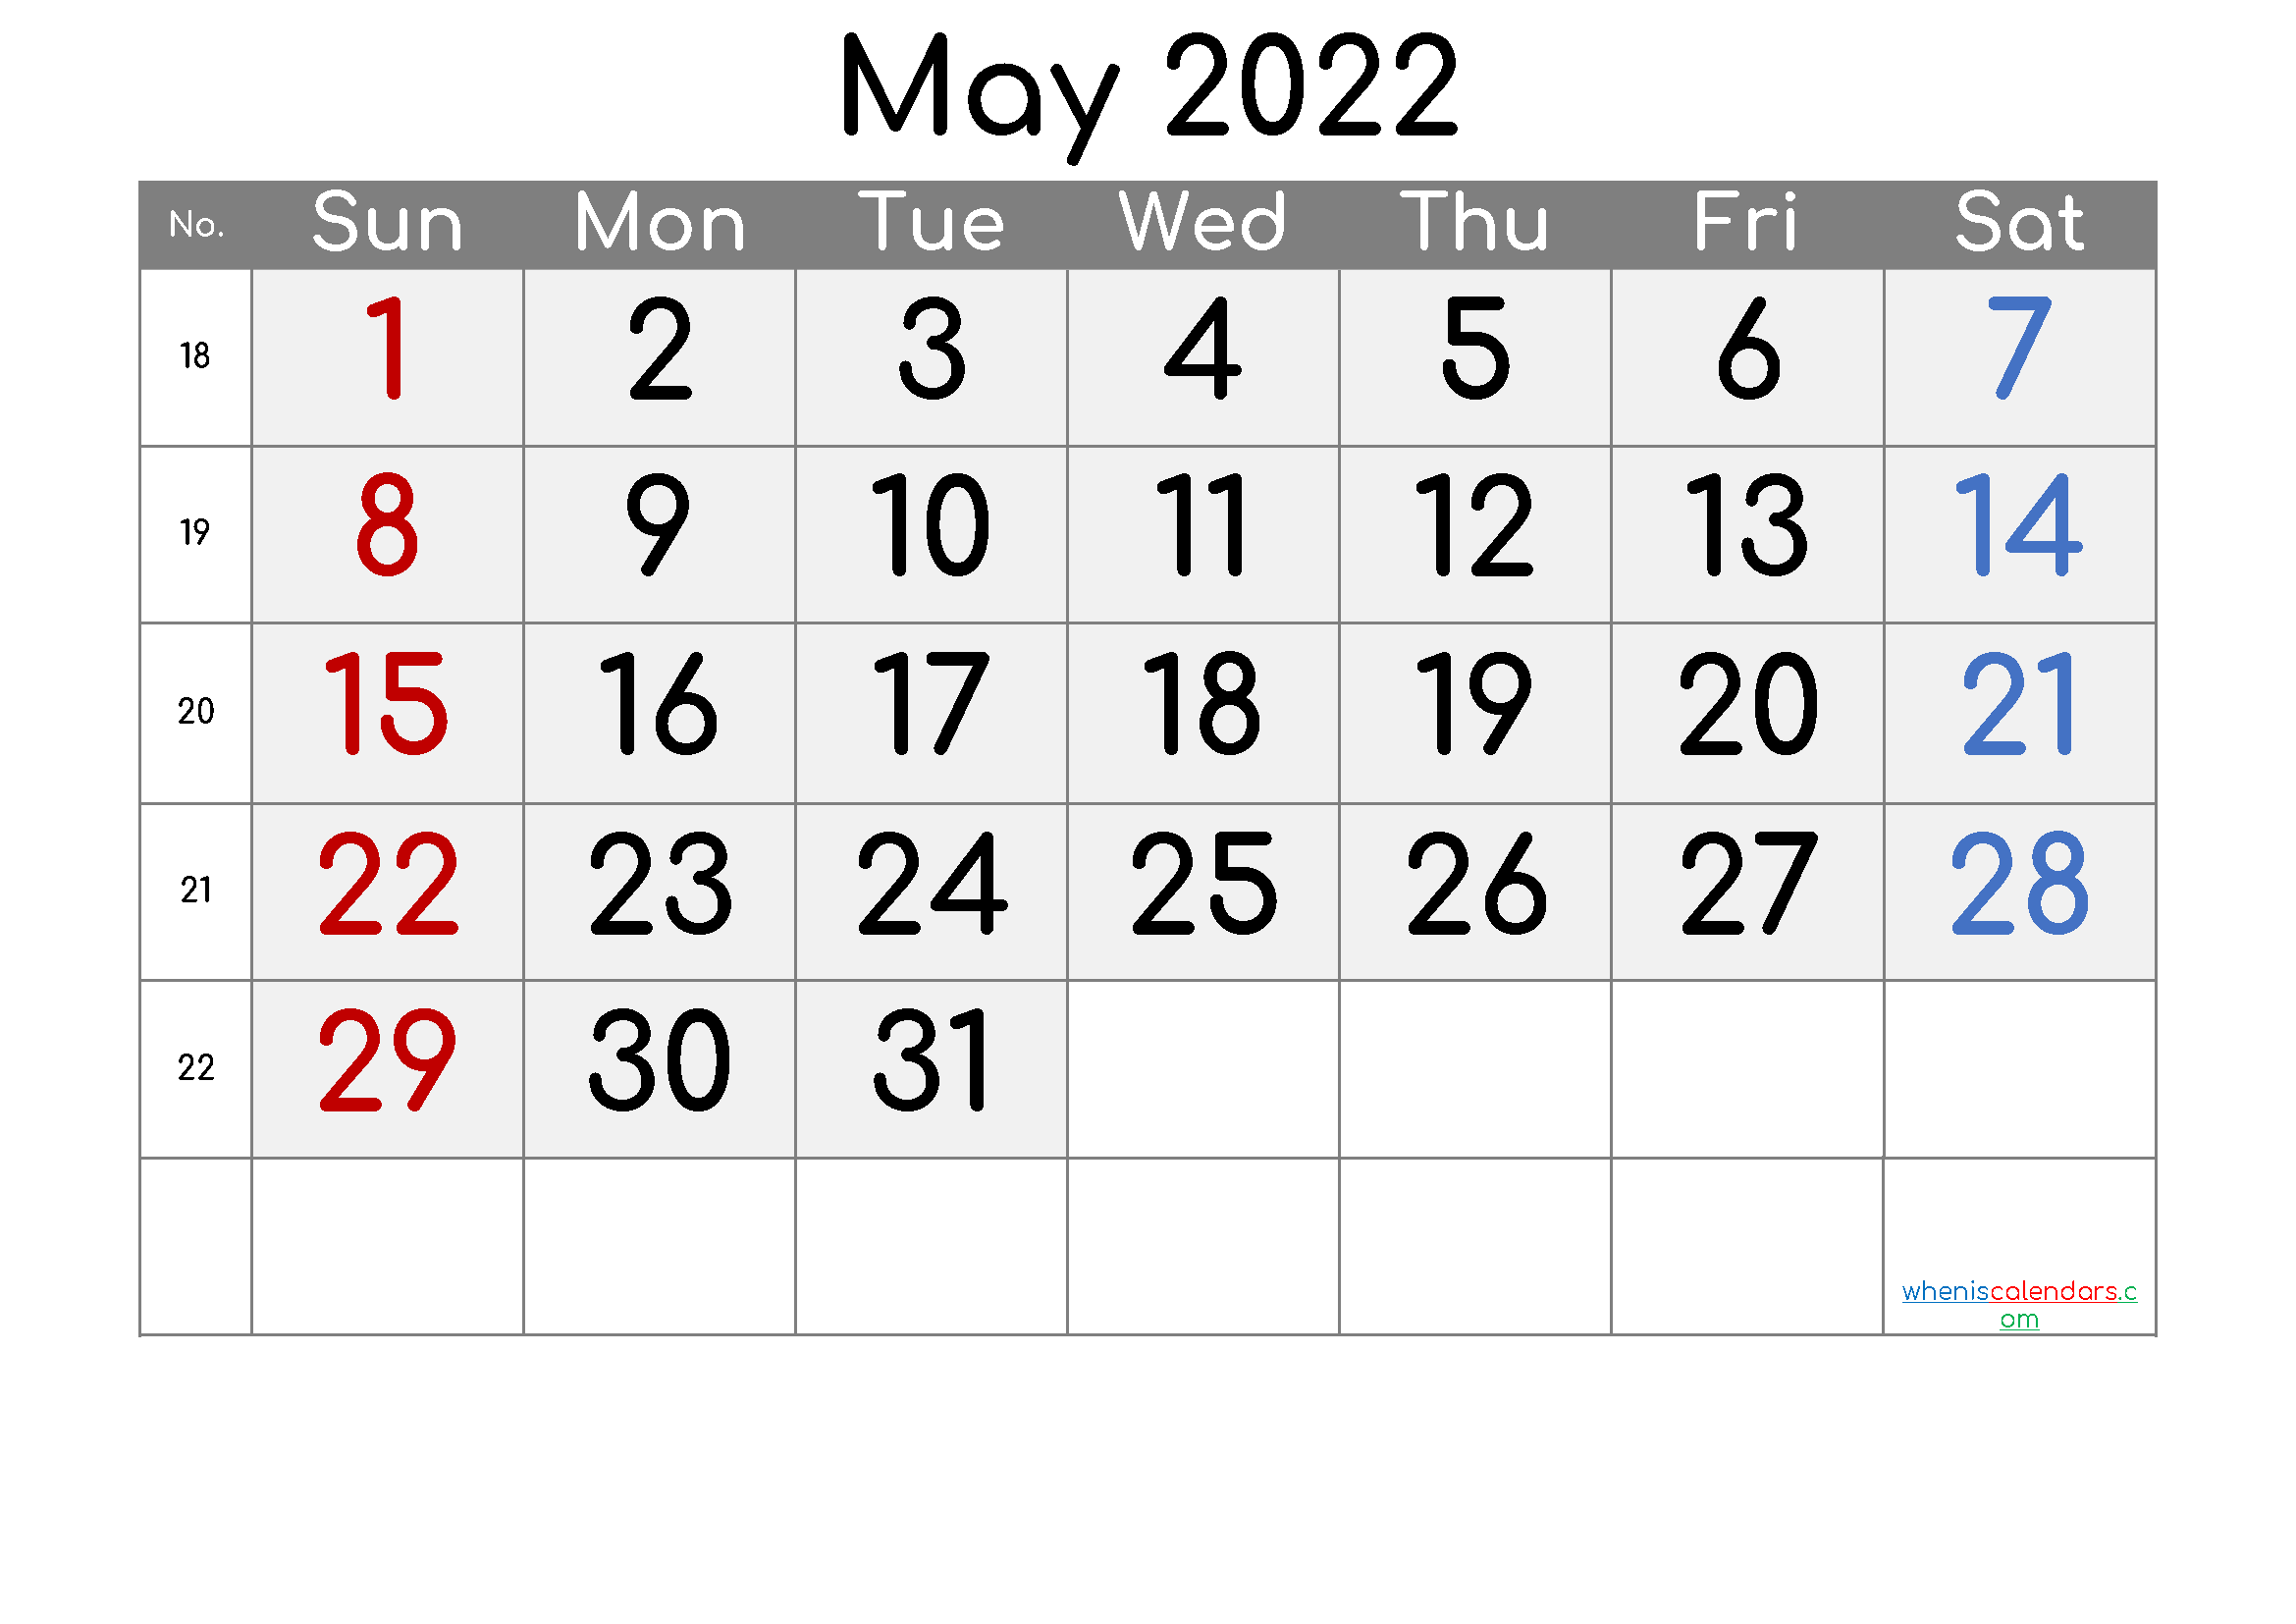 free-may-2022-calendar-6-templates